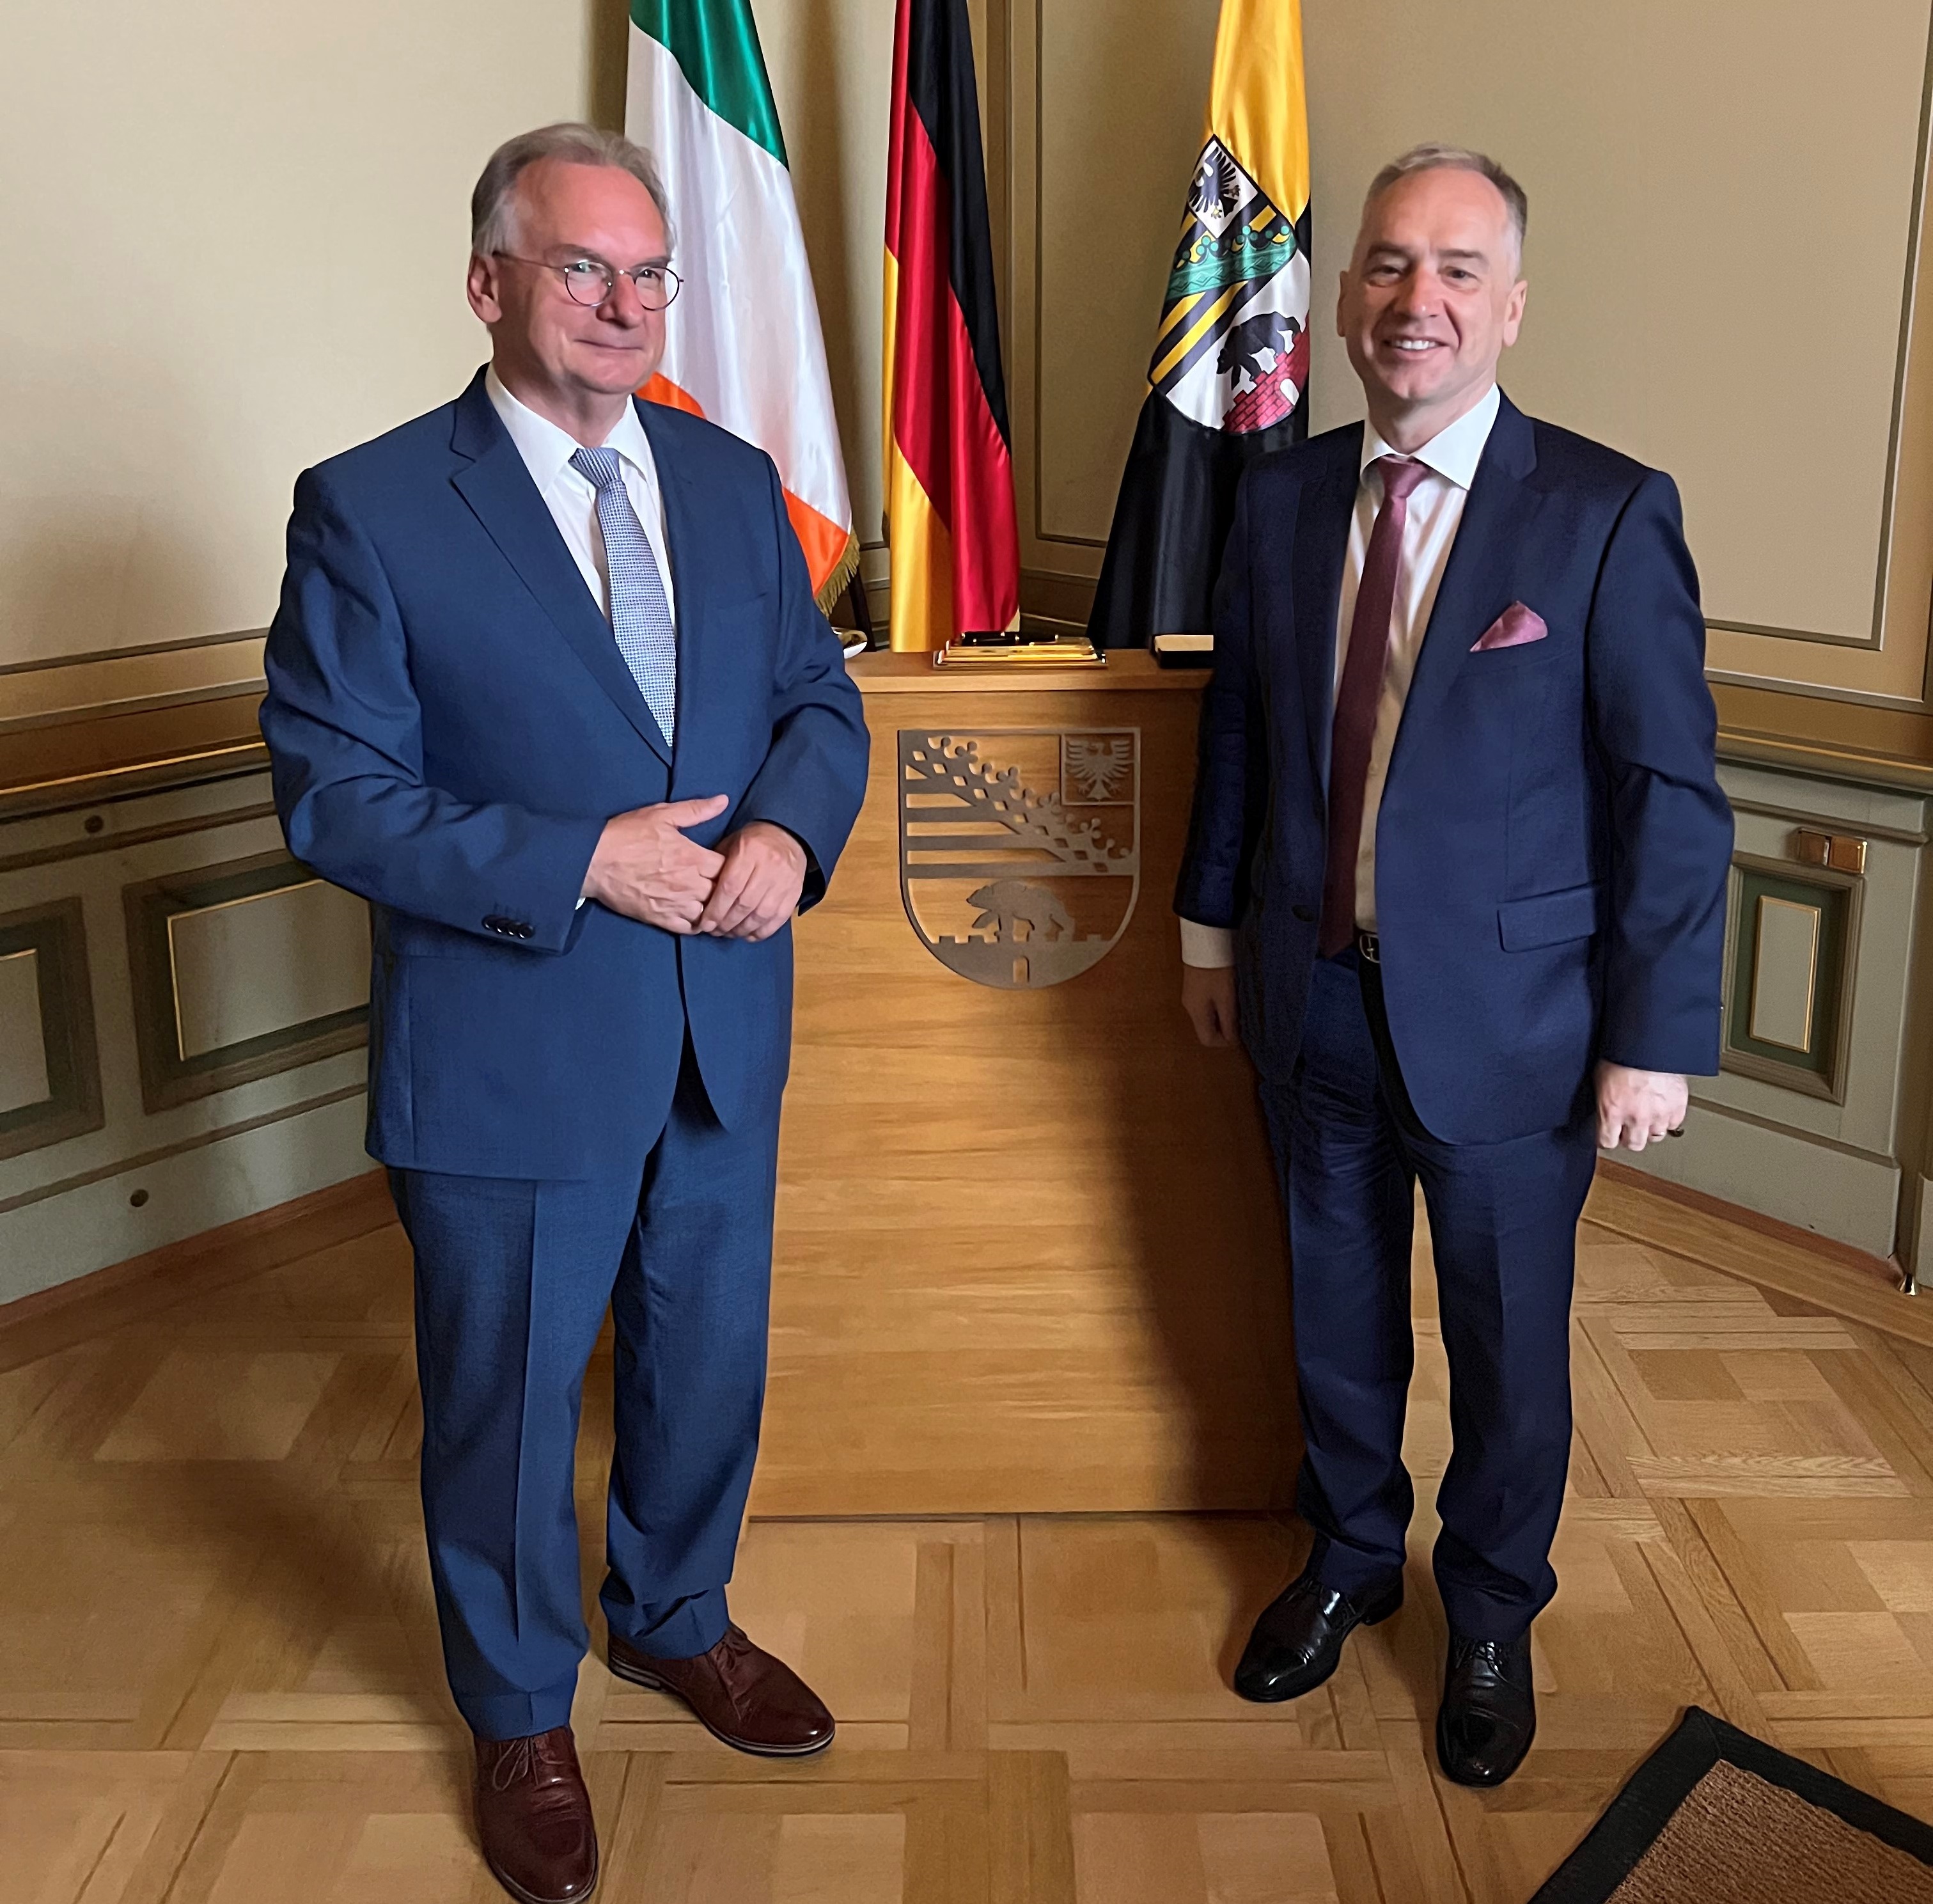 Courtesy Visit of Ambassador Dr. Nicholas O’Brien to Saxony-Anhalt on 7 July 2022